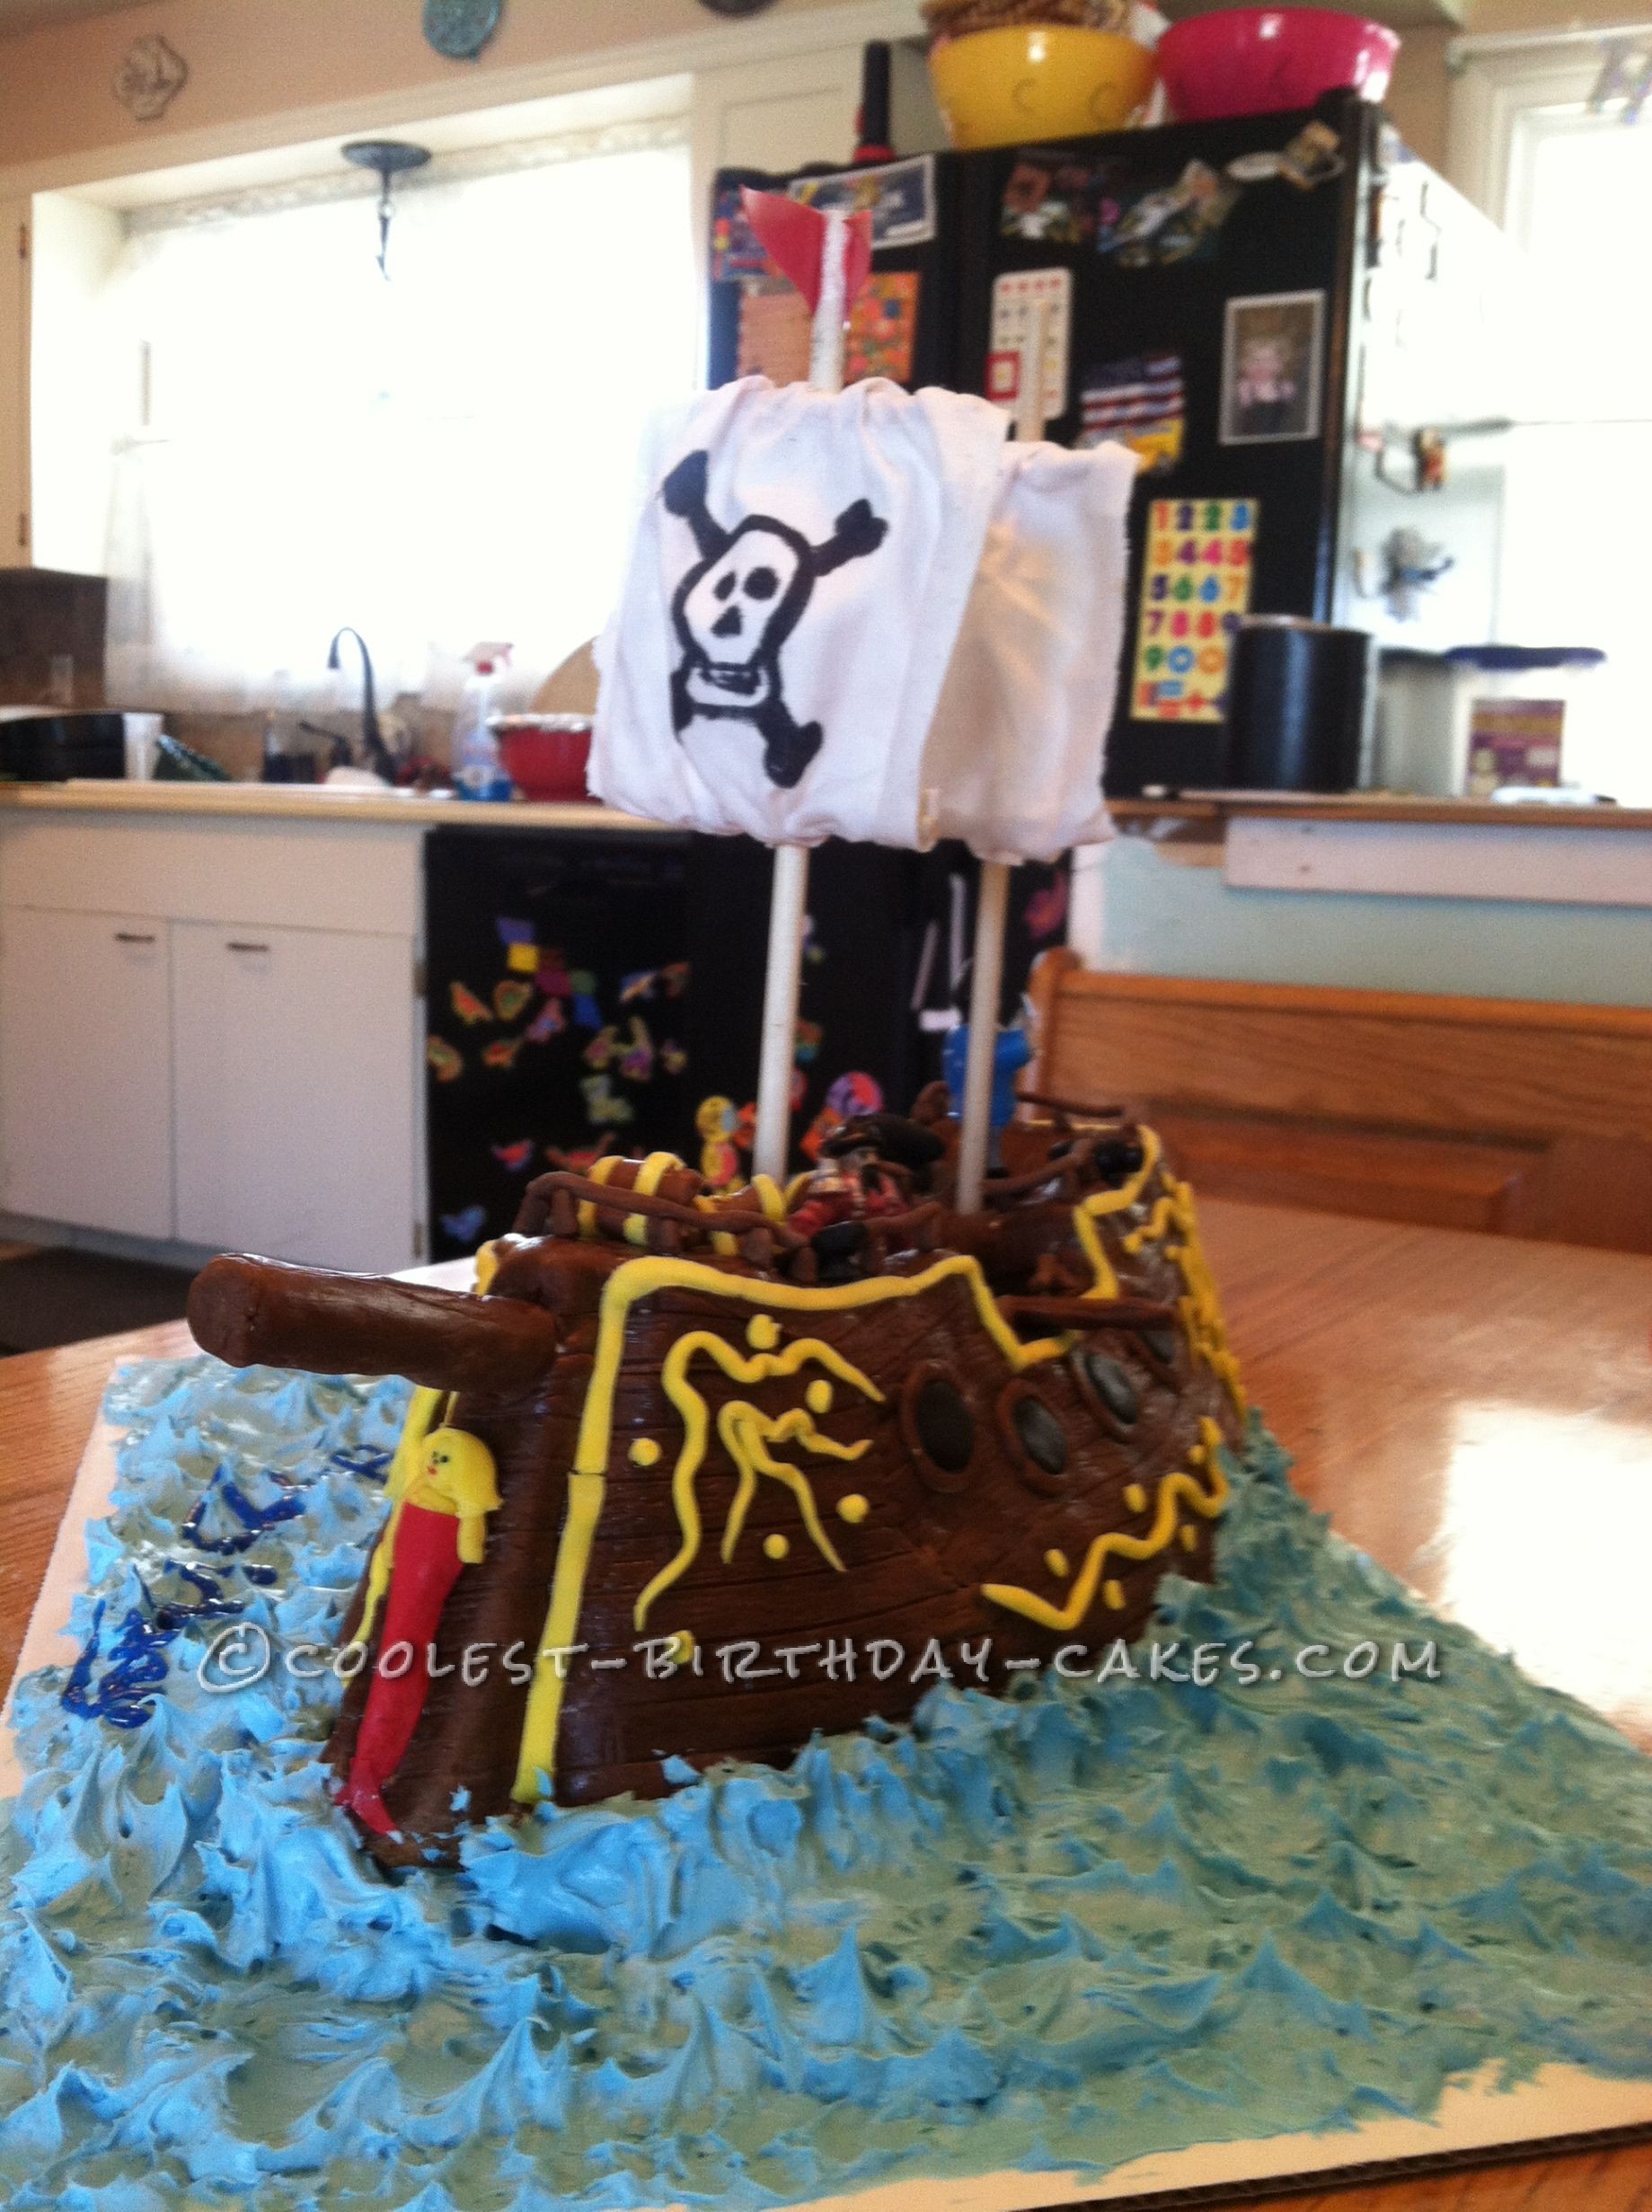 Coolest Pirate Ship Cake